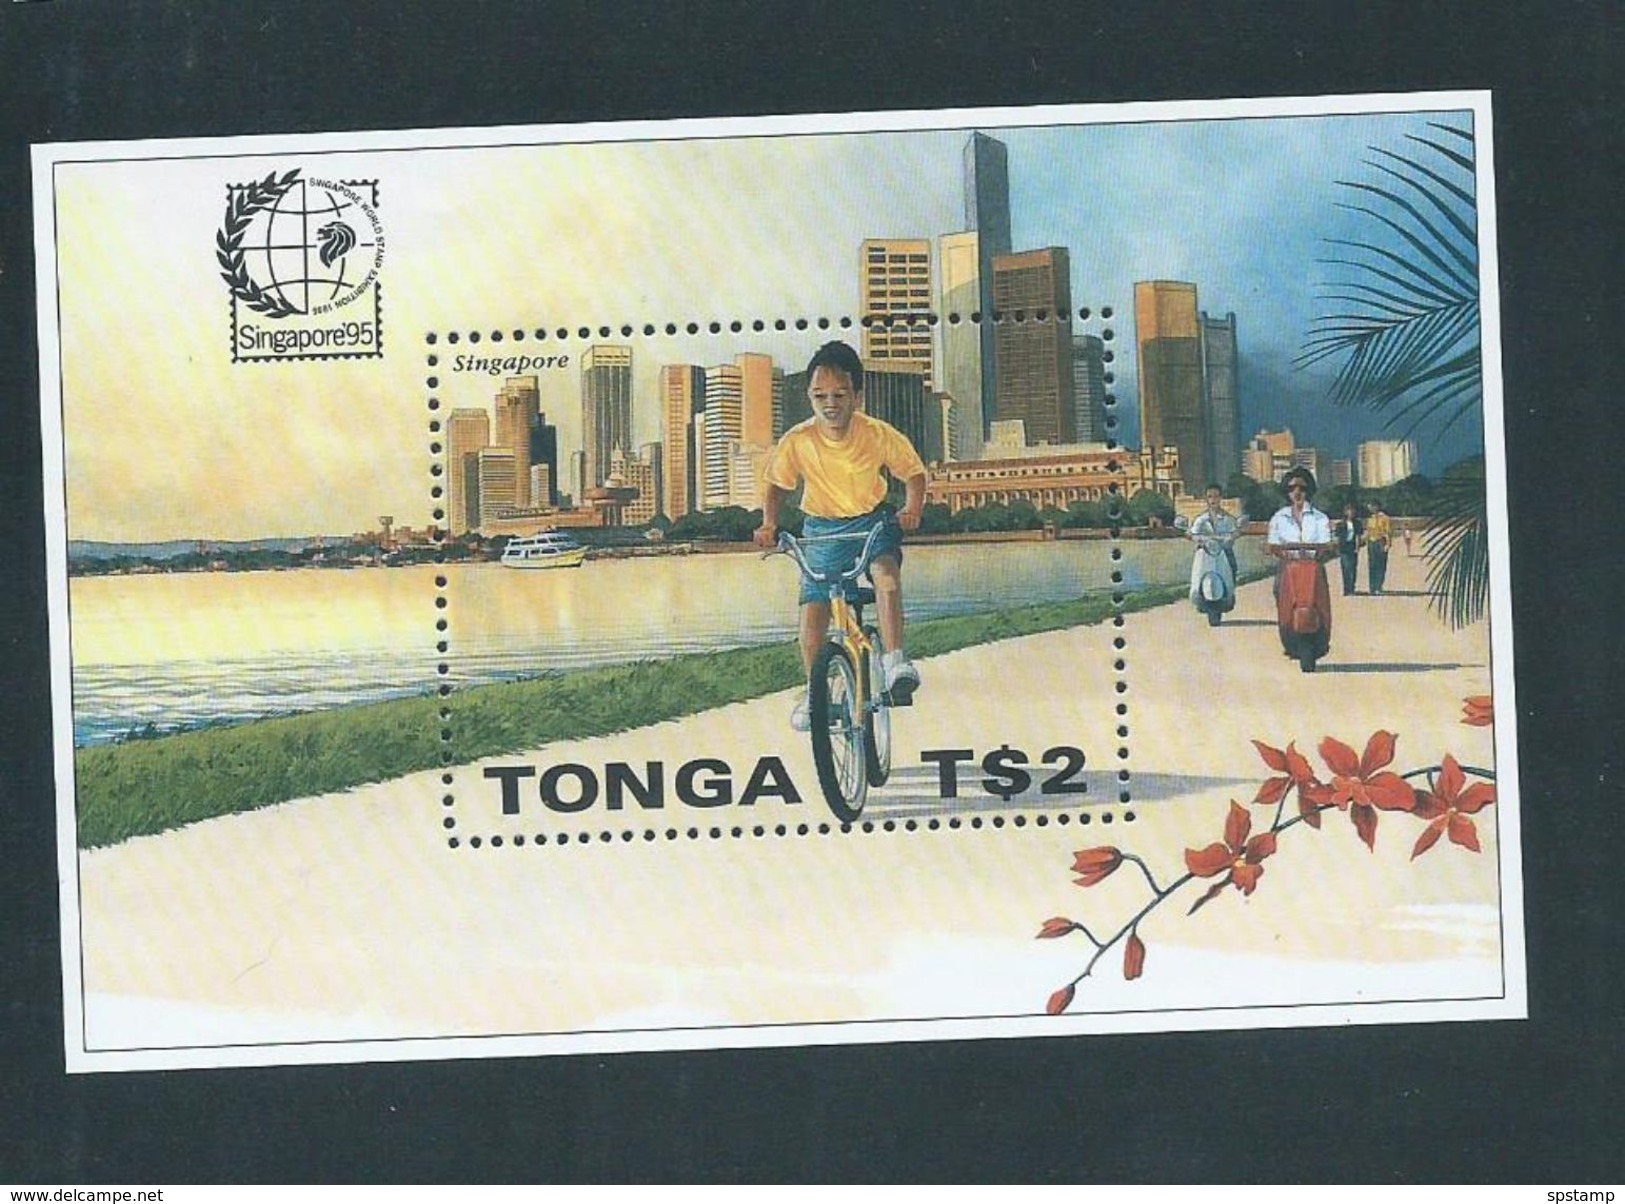 Tonga 1995 Singapore Stamp Exhibition Miniature Sheet MNH - Tonga (1970-...)